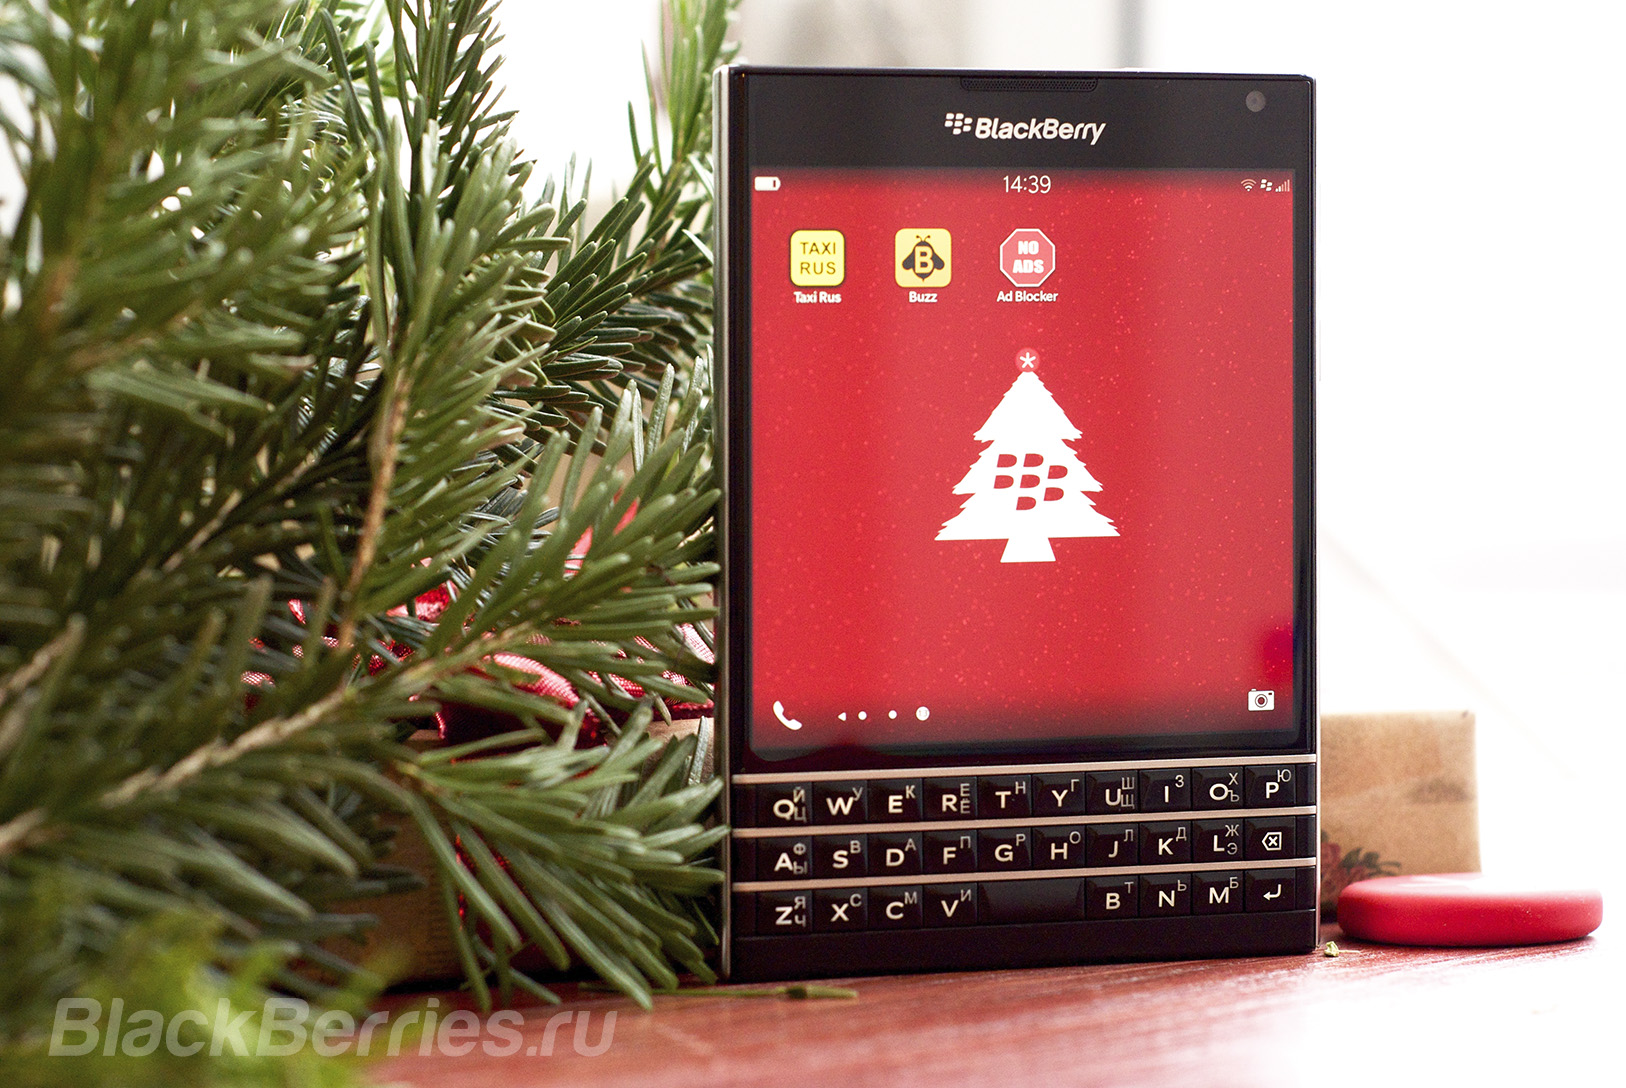 BlackBerry-New-Year-Apps-09